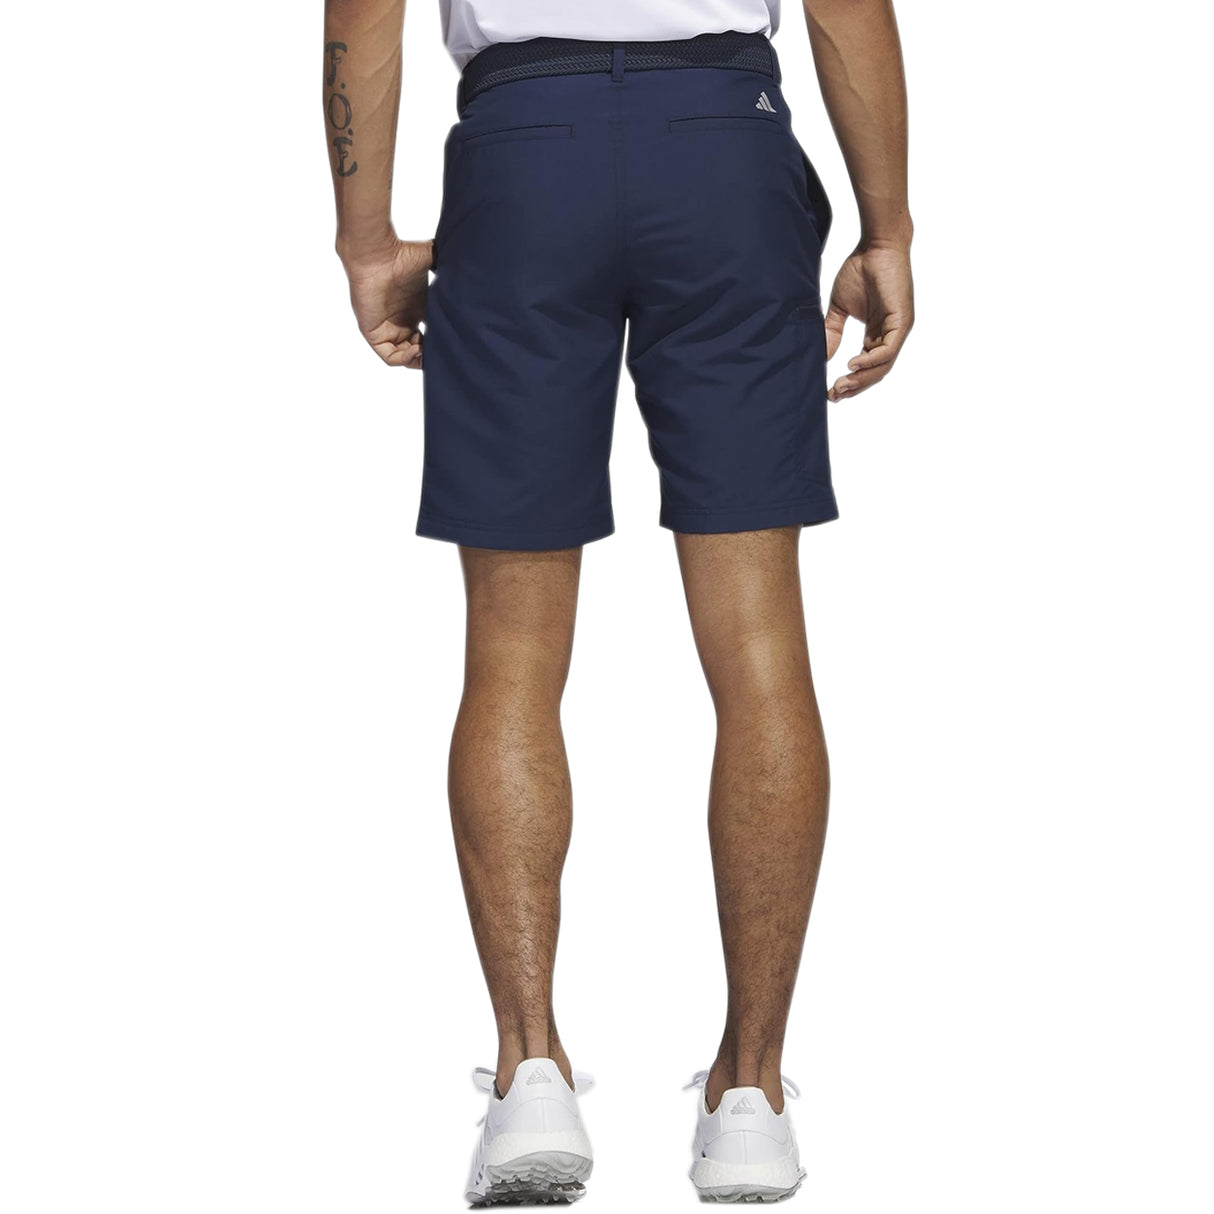 Adidas Men's Cargo 9" Golf Shorts